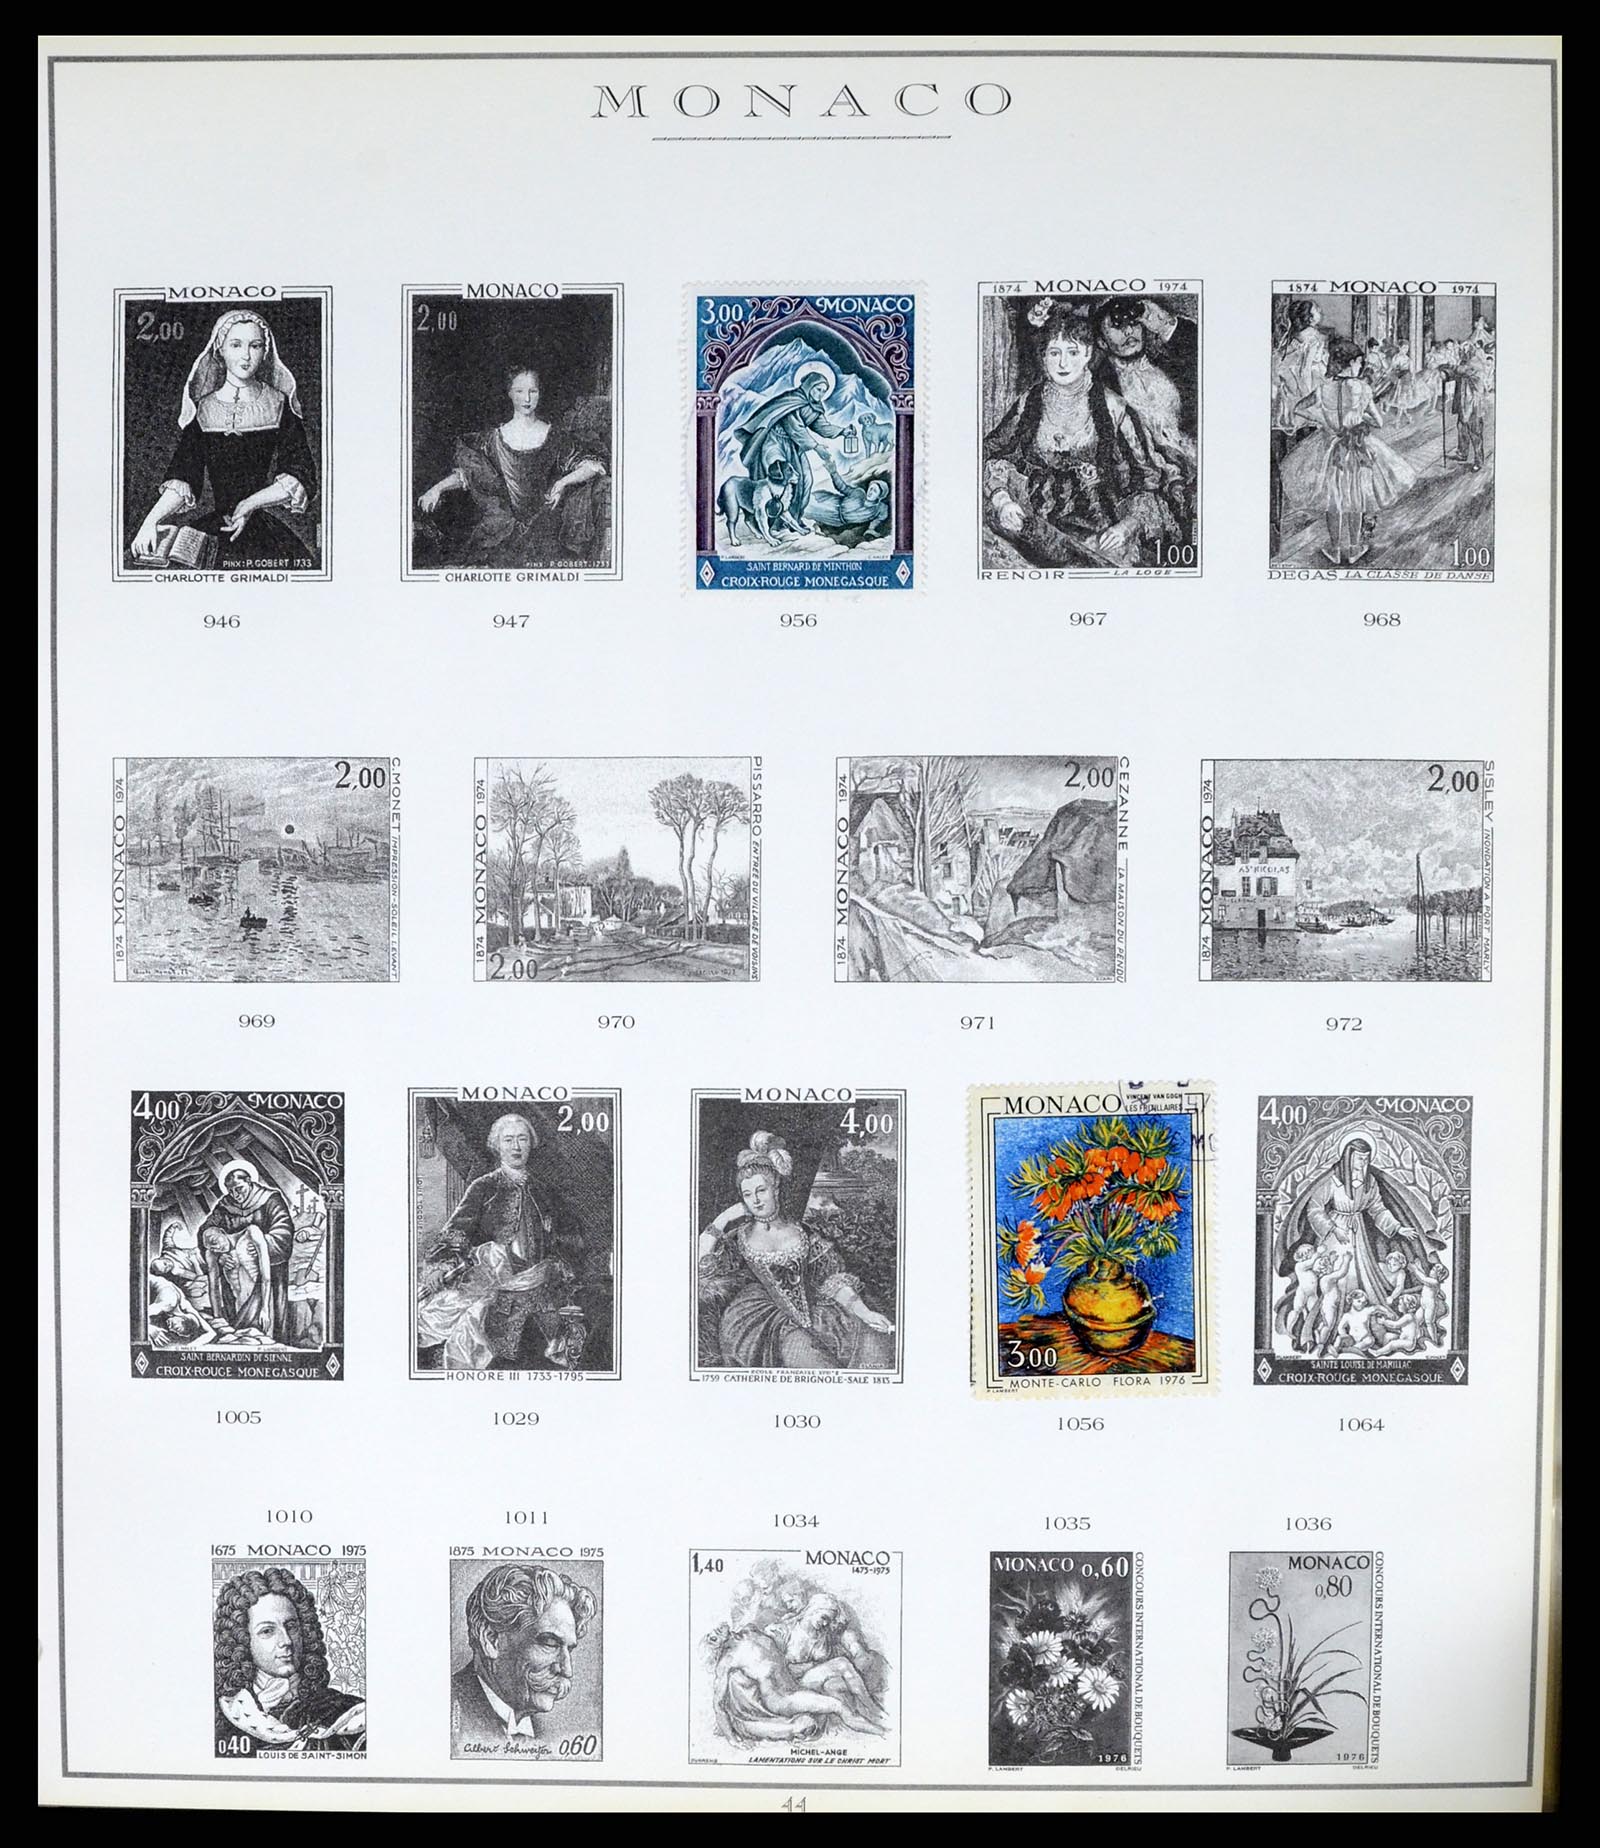 37437 086 - Stamp collection 37437 Monaco 1885-1996.